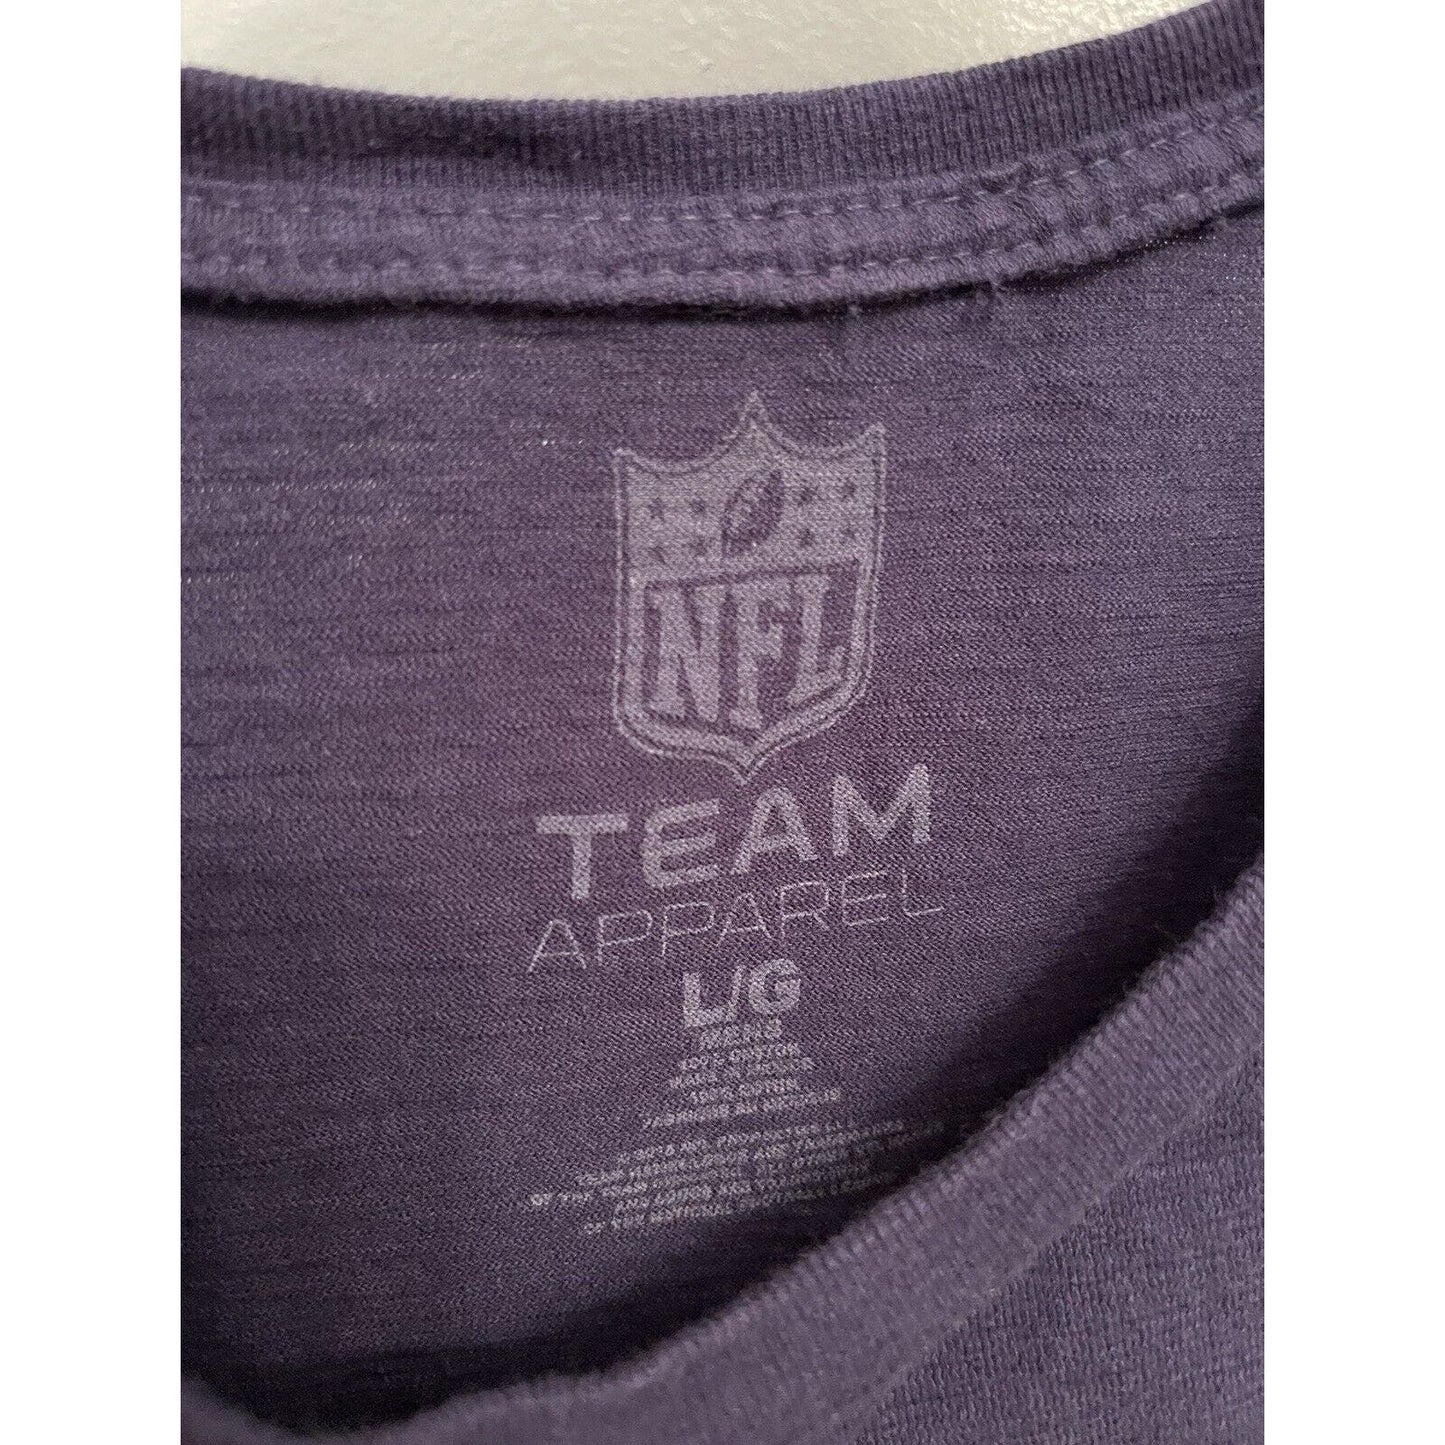 Denver Broncos Shirt Nike Tee Logo Short Sleeve Cotton Black Mens Large